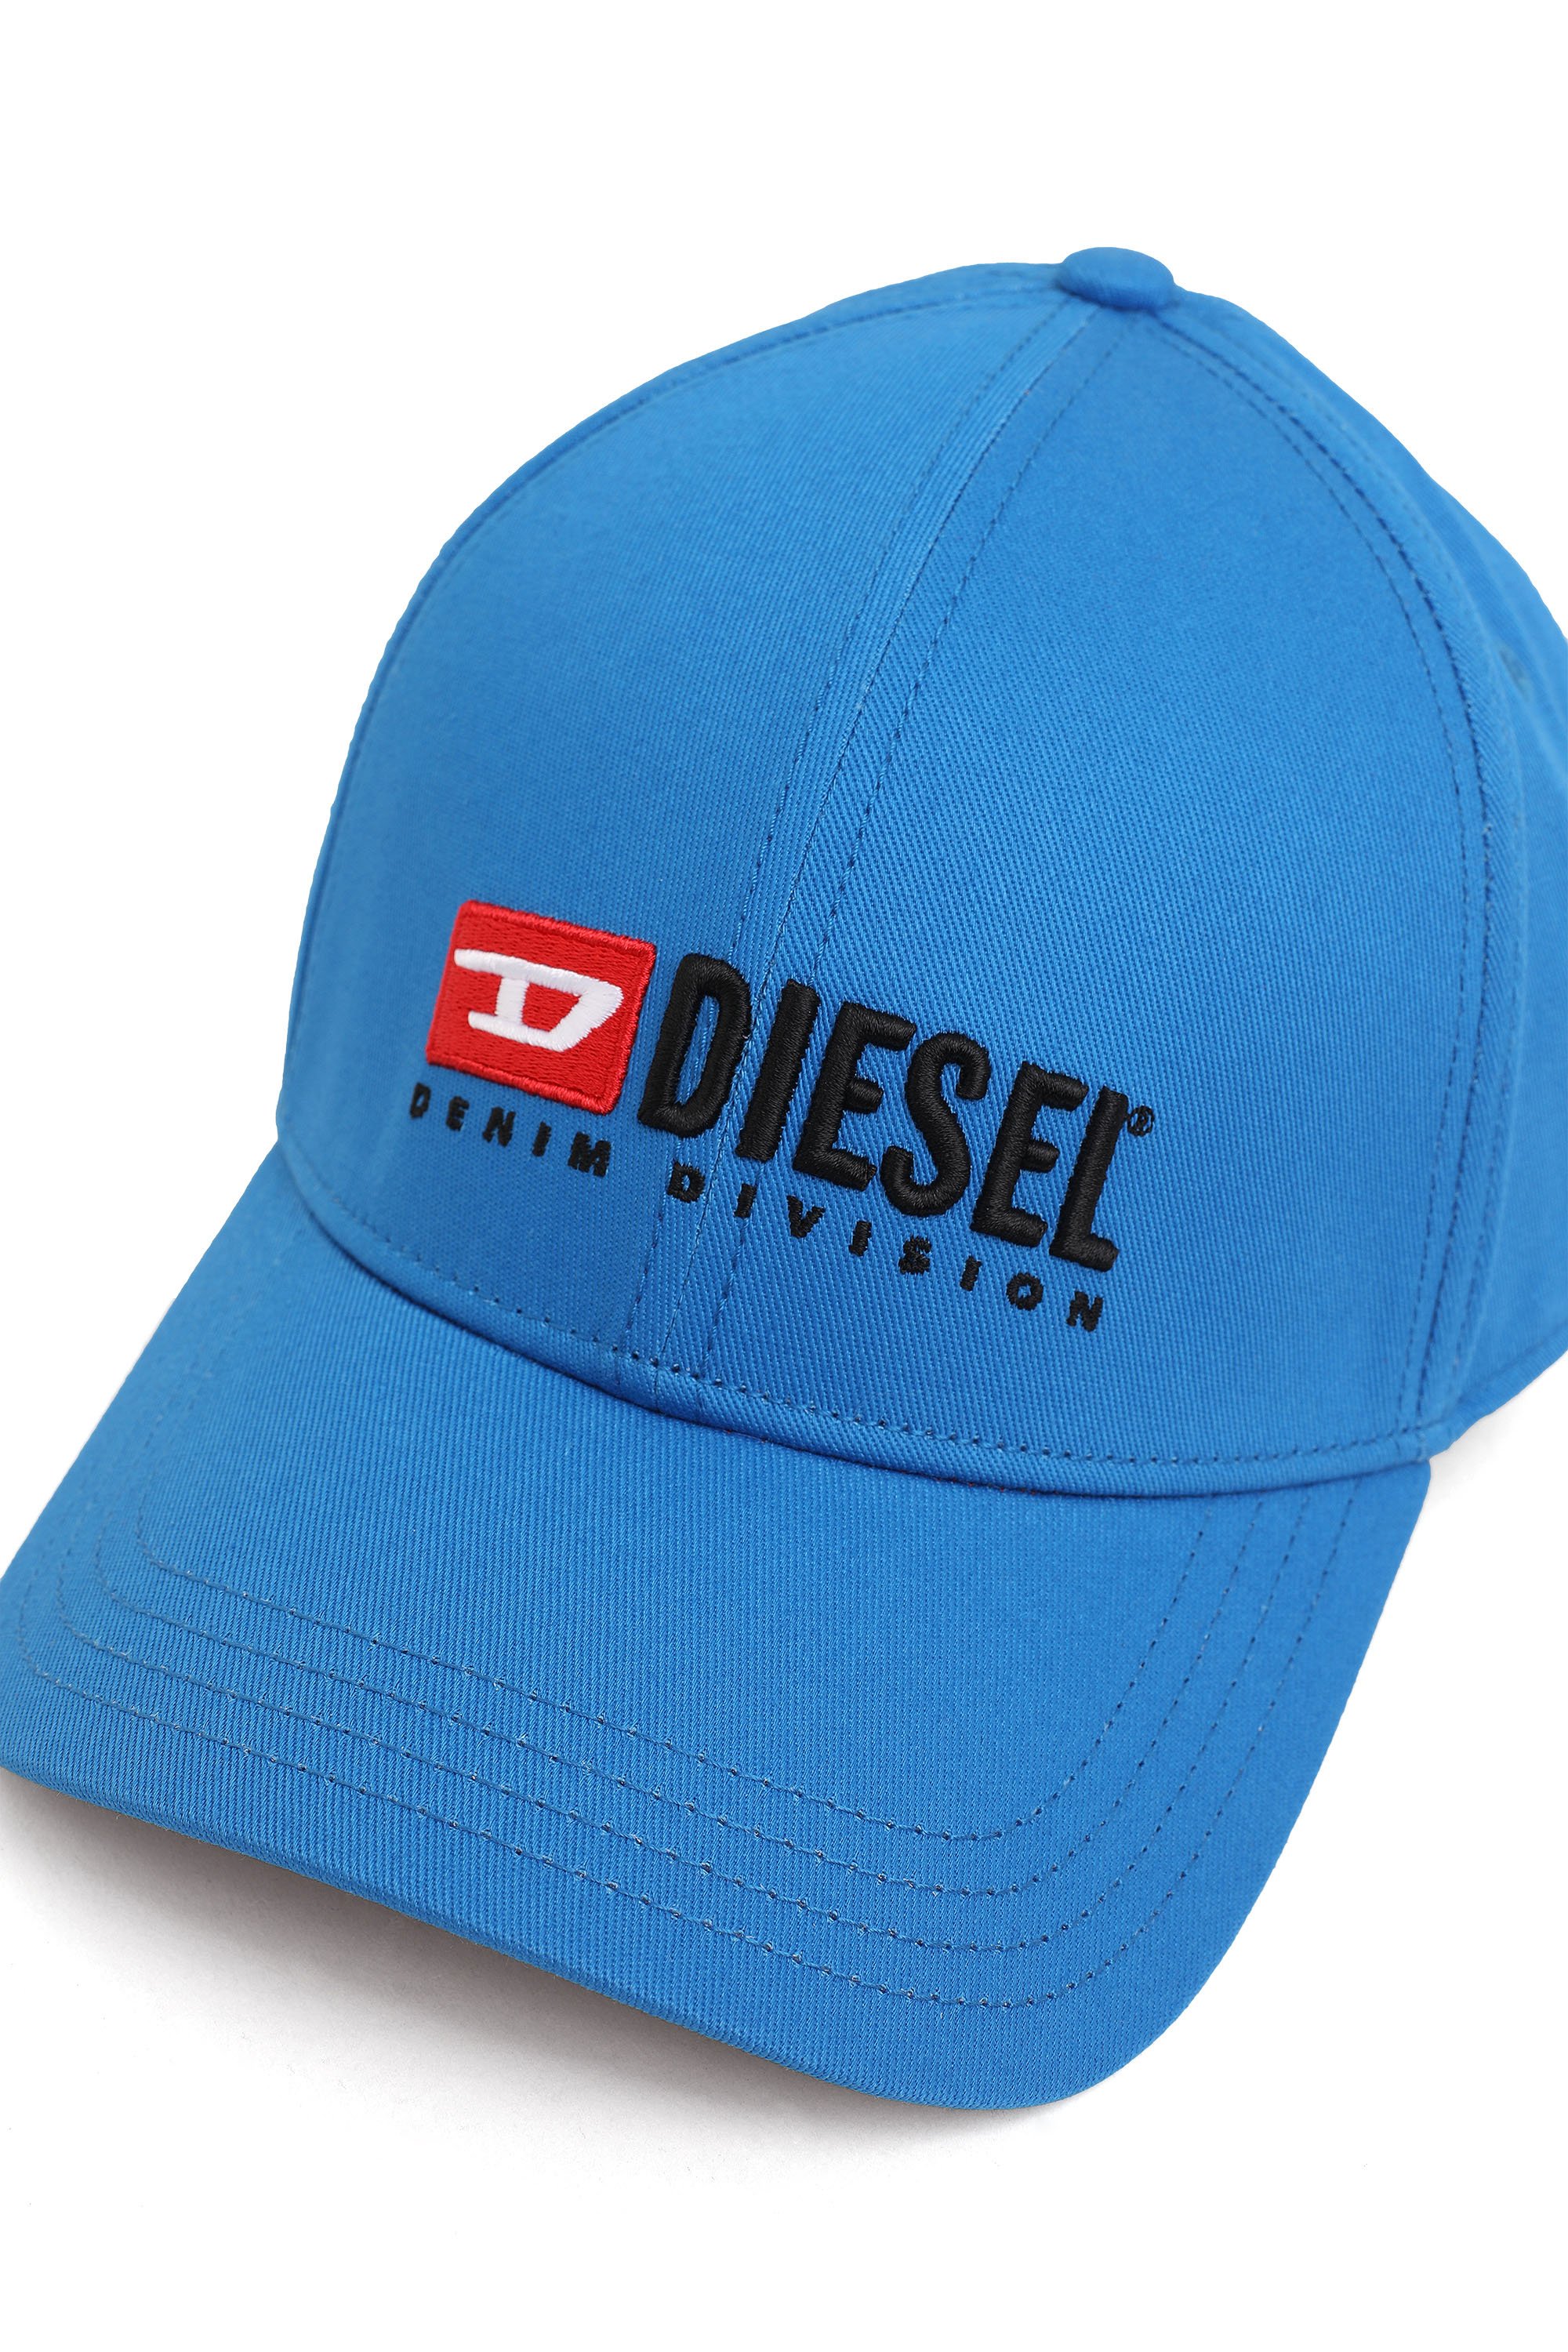 Diesel - CORRY-DIV, Azul - Image 3